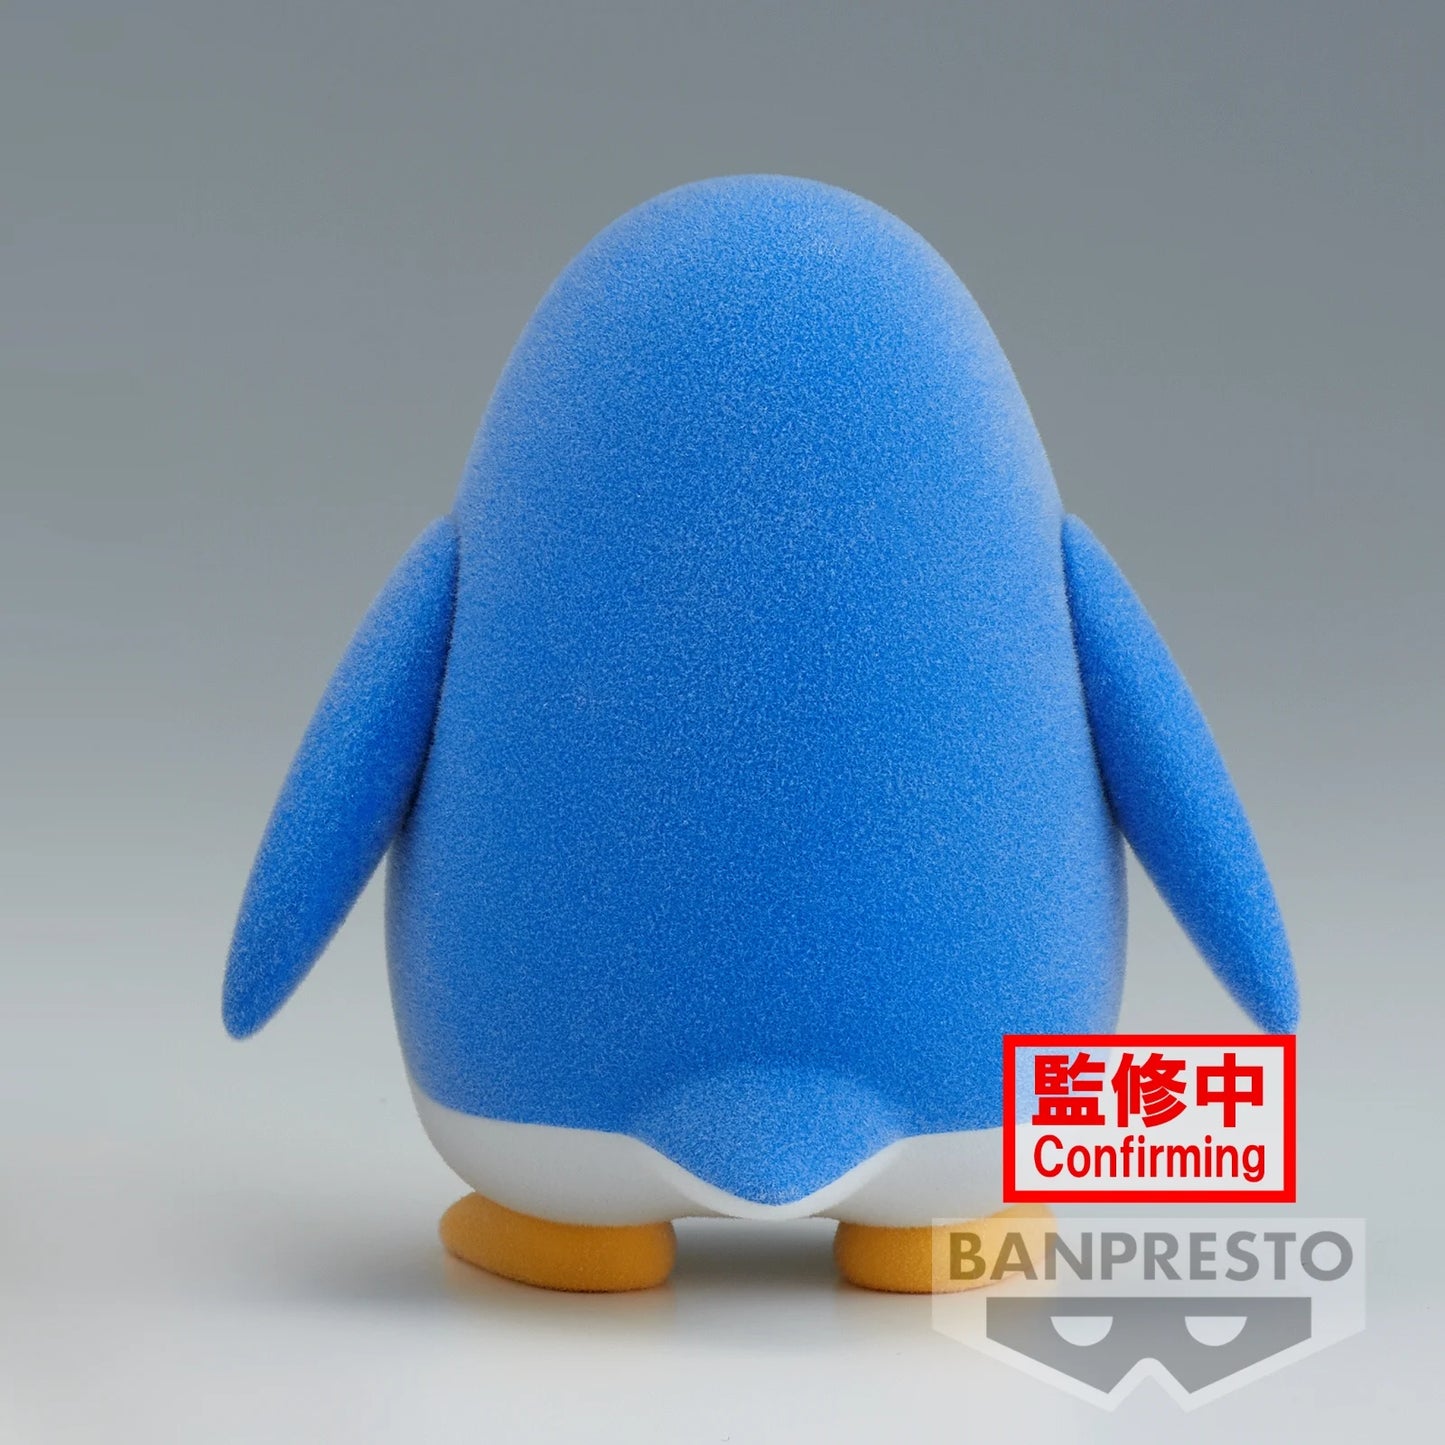 Penguin - Figurine Fluffy Puffy